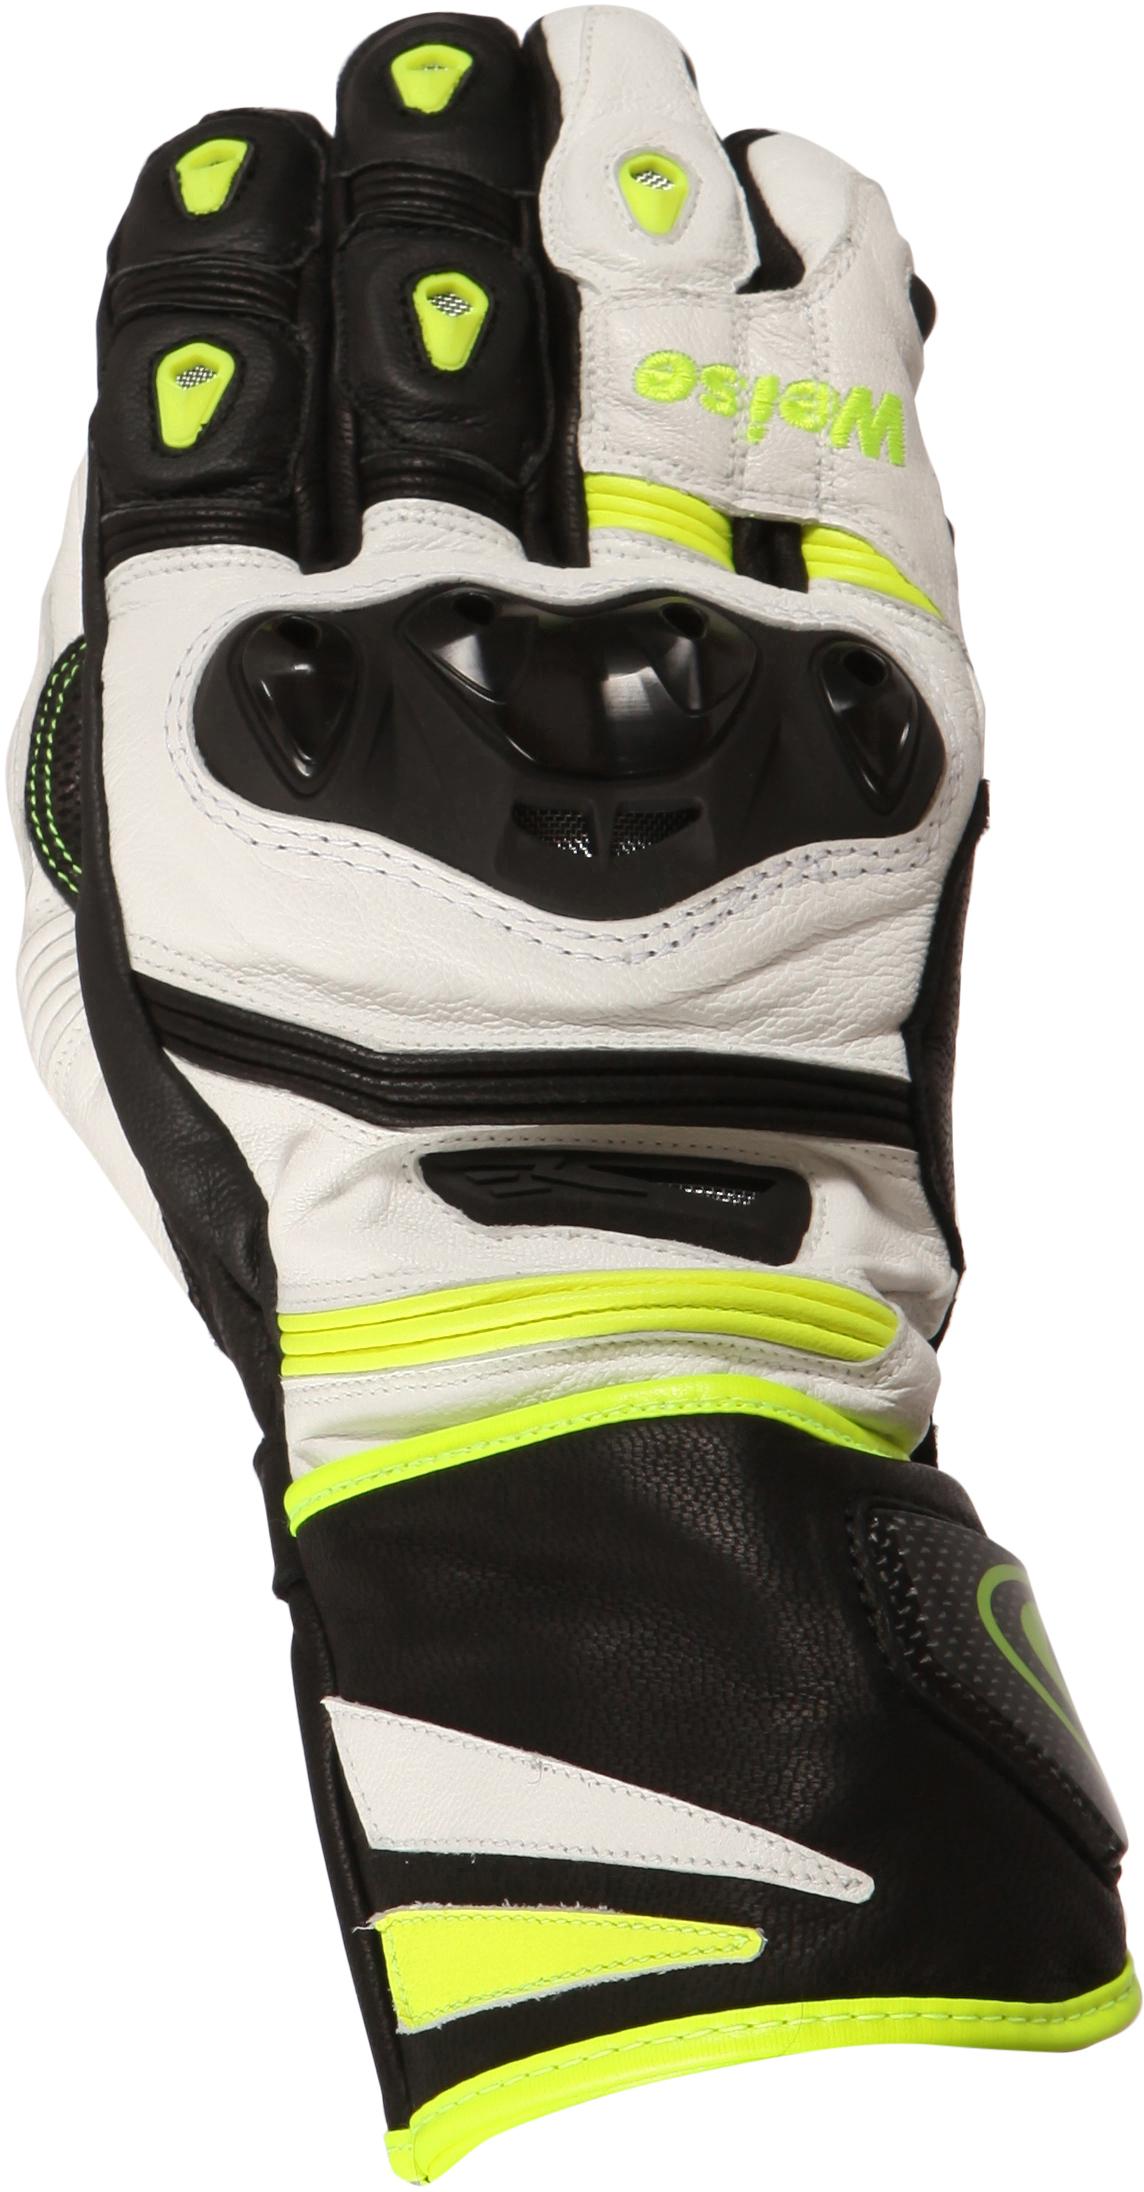 Weise Lancer Gloves Black/White Small